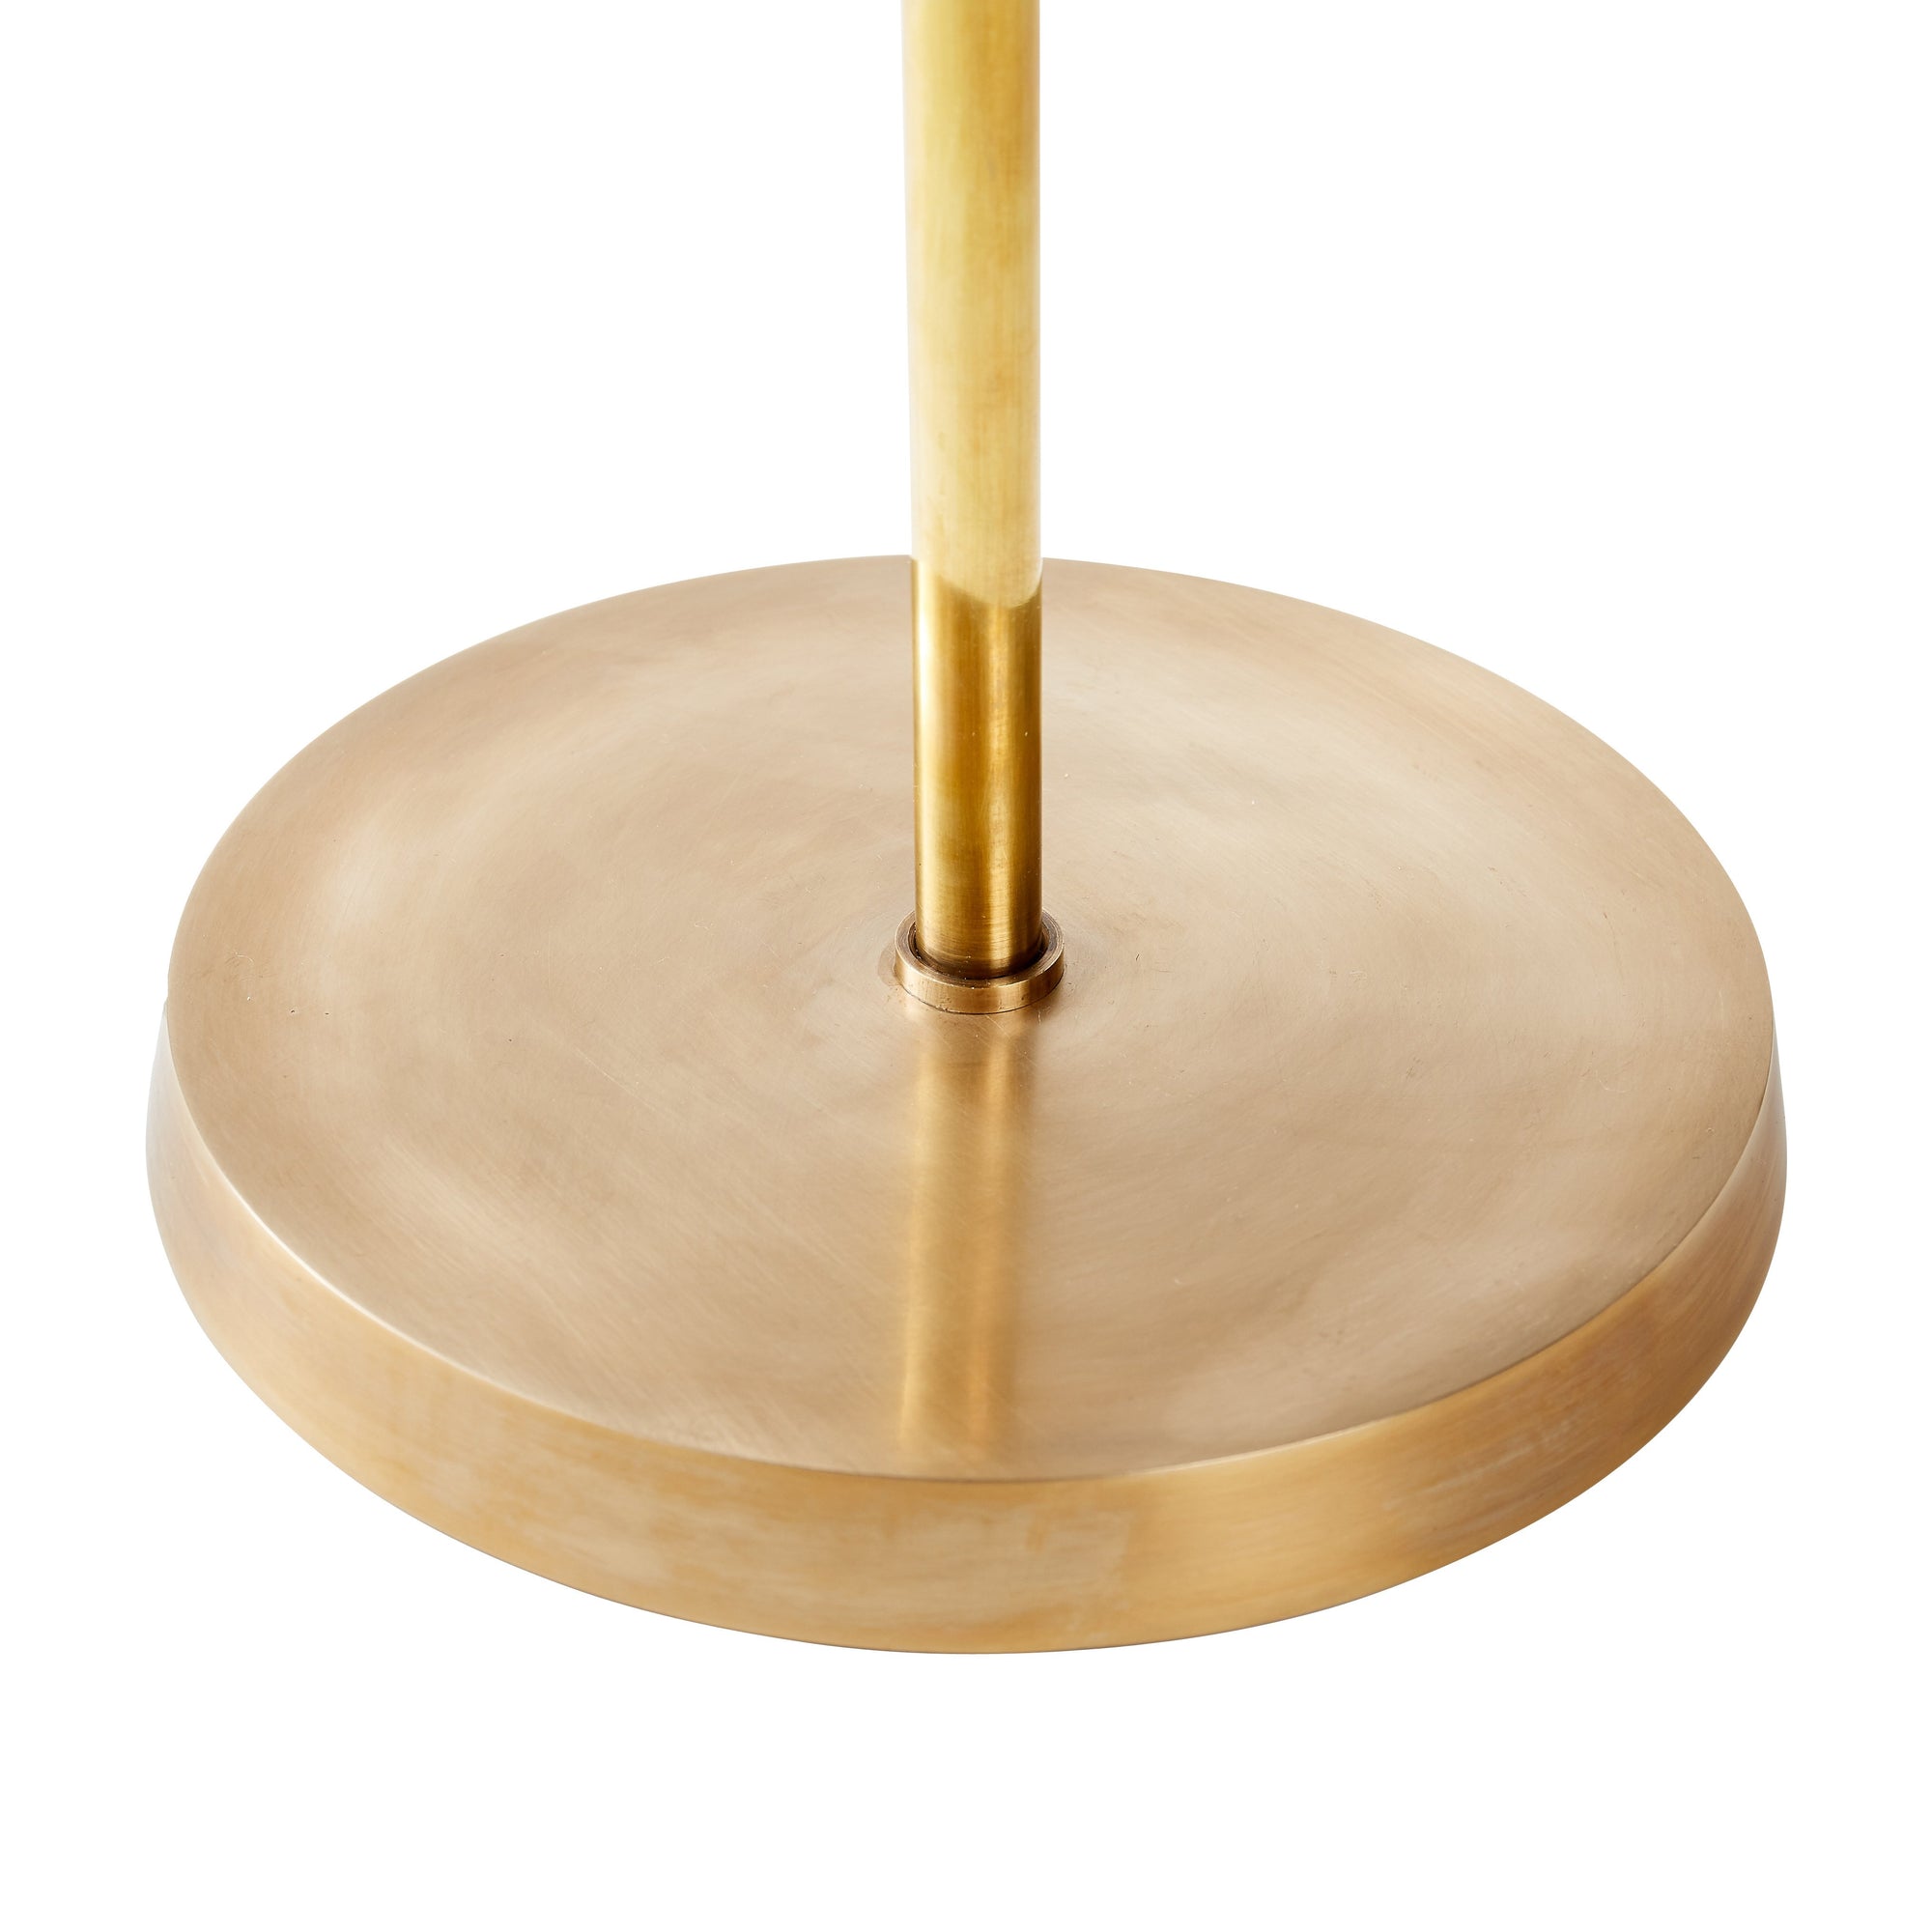 Circular Brass Base of Scarlett Floor Lamp